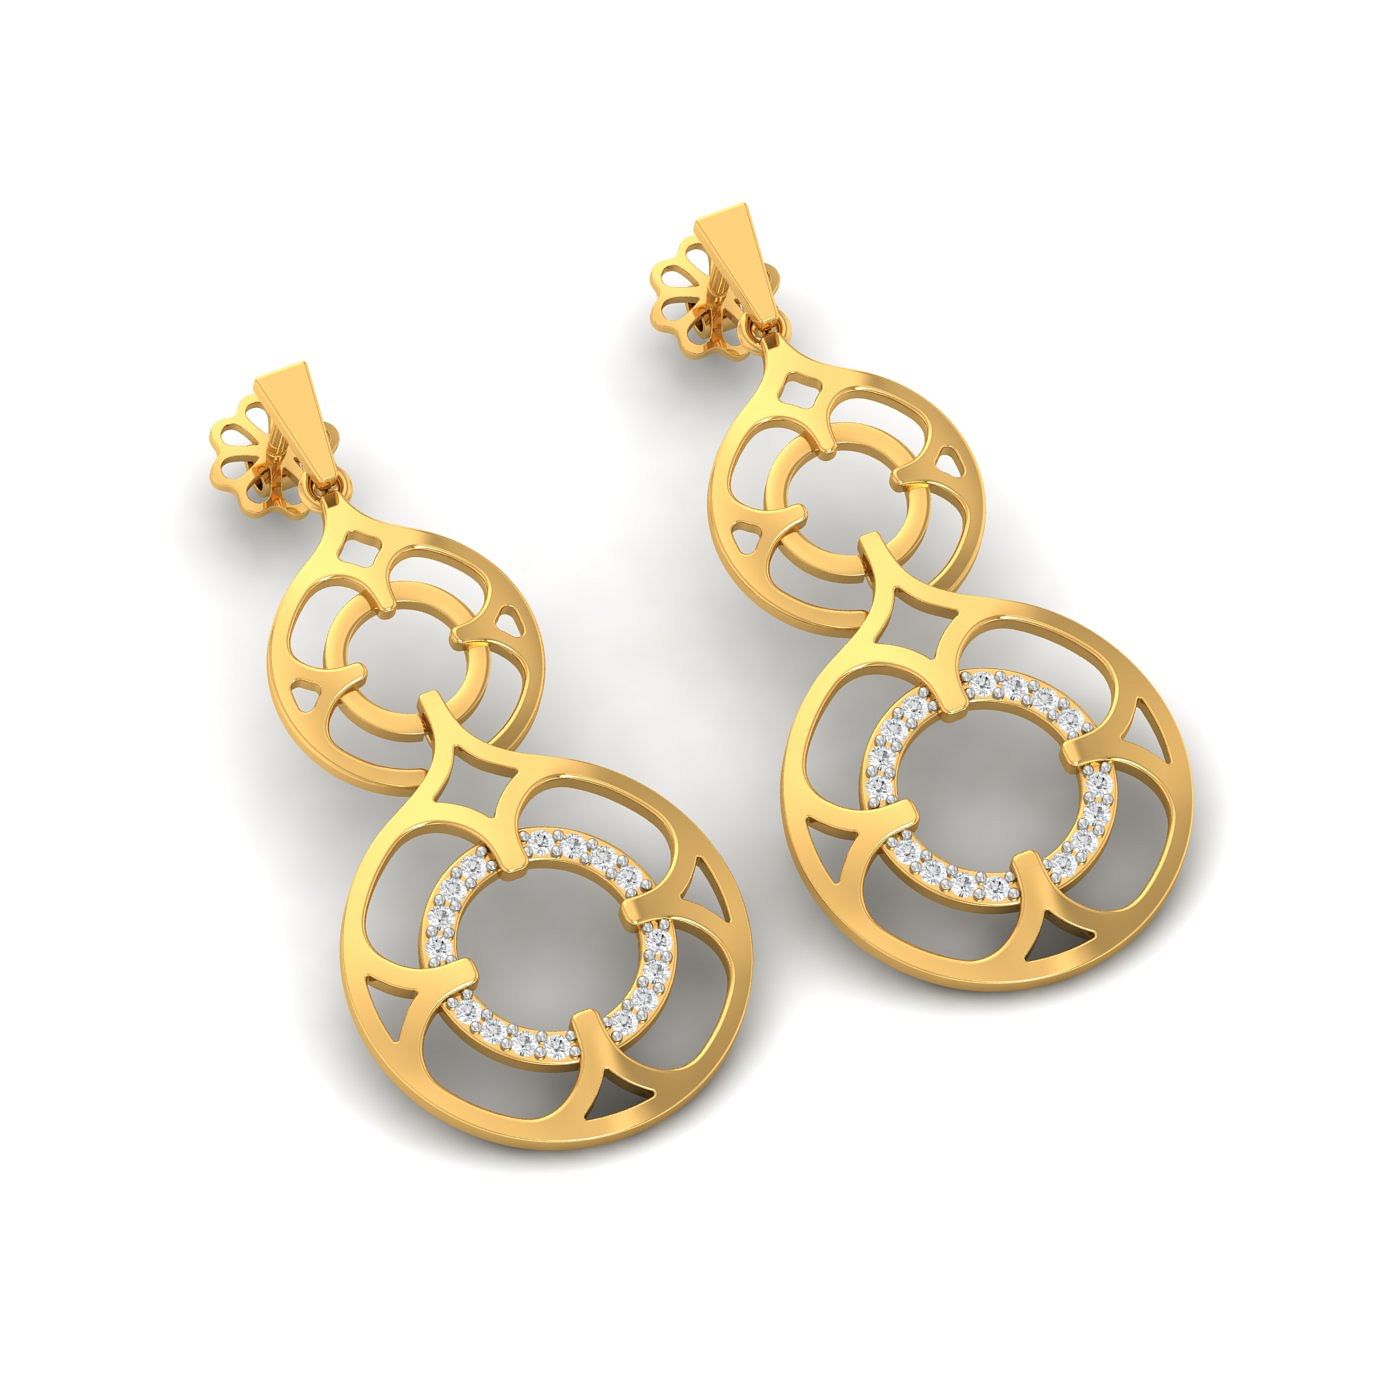 dual floral diamond earrings | floral style drop earring | floral style yellow gold drop earring